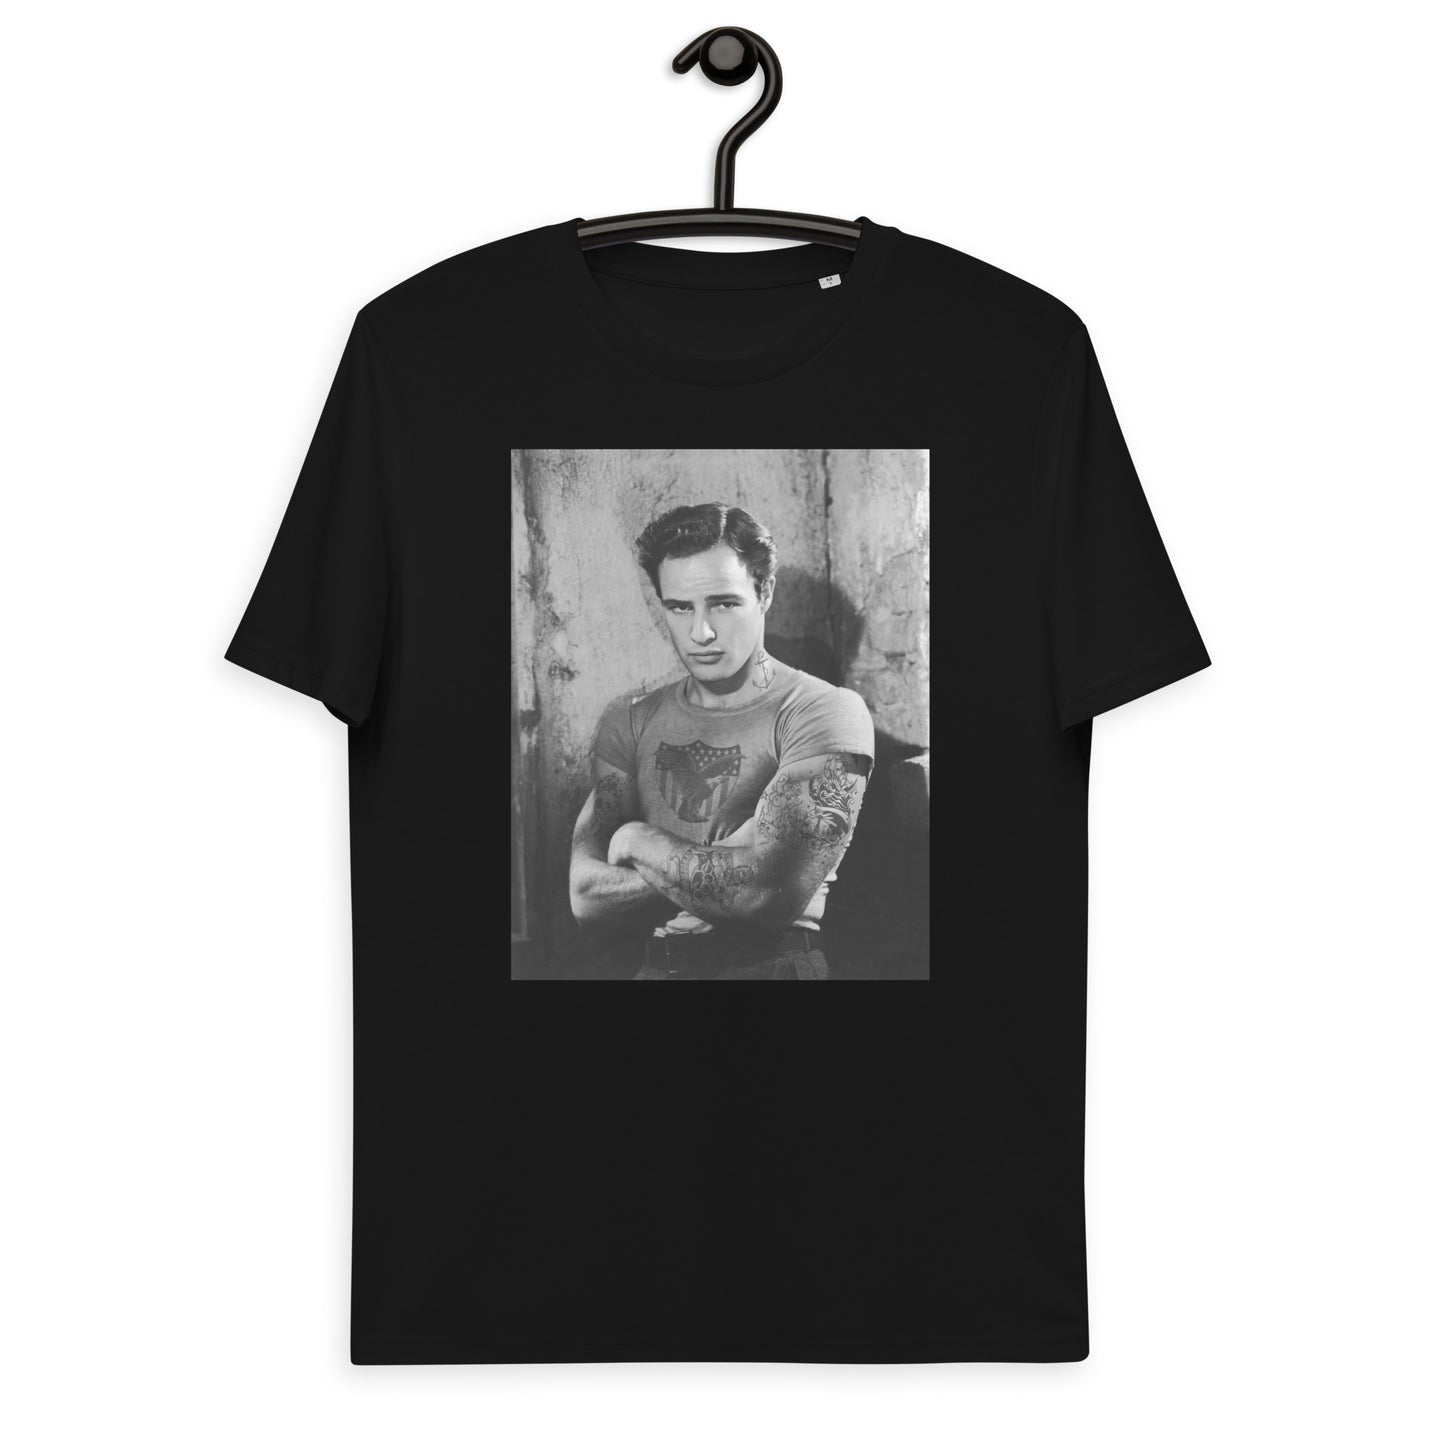 Marlon Brando KiSS Unisex organic cotton t-shirt - Tattooed Hollywood godfather